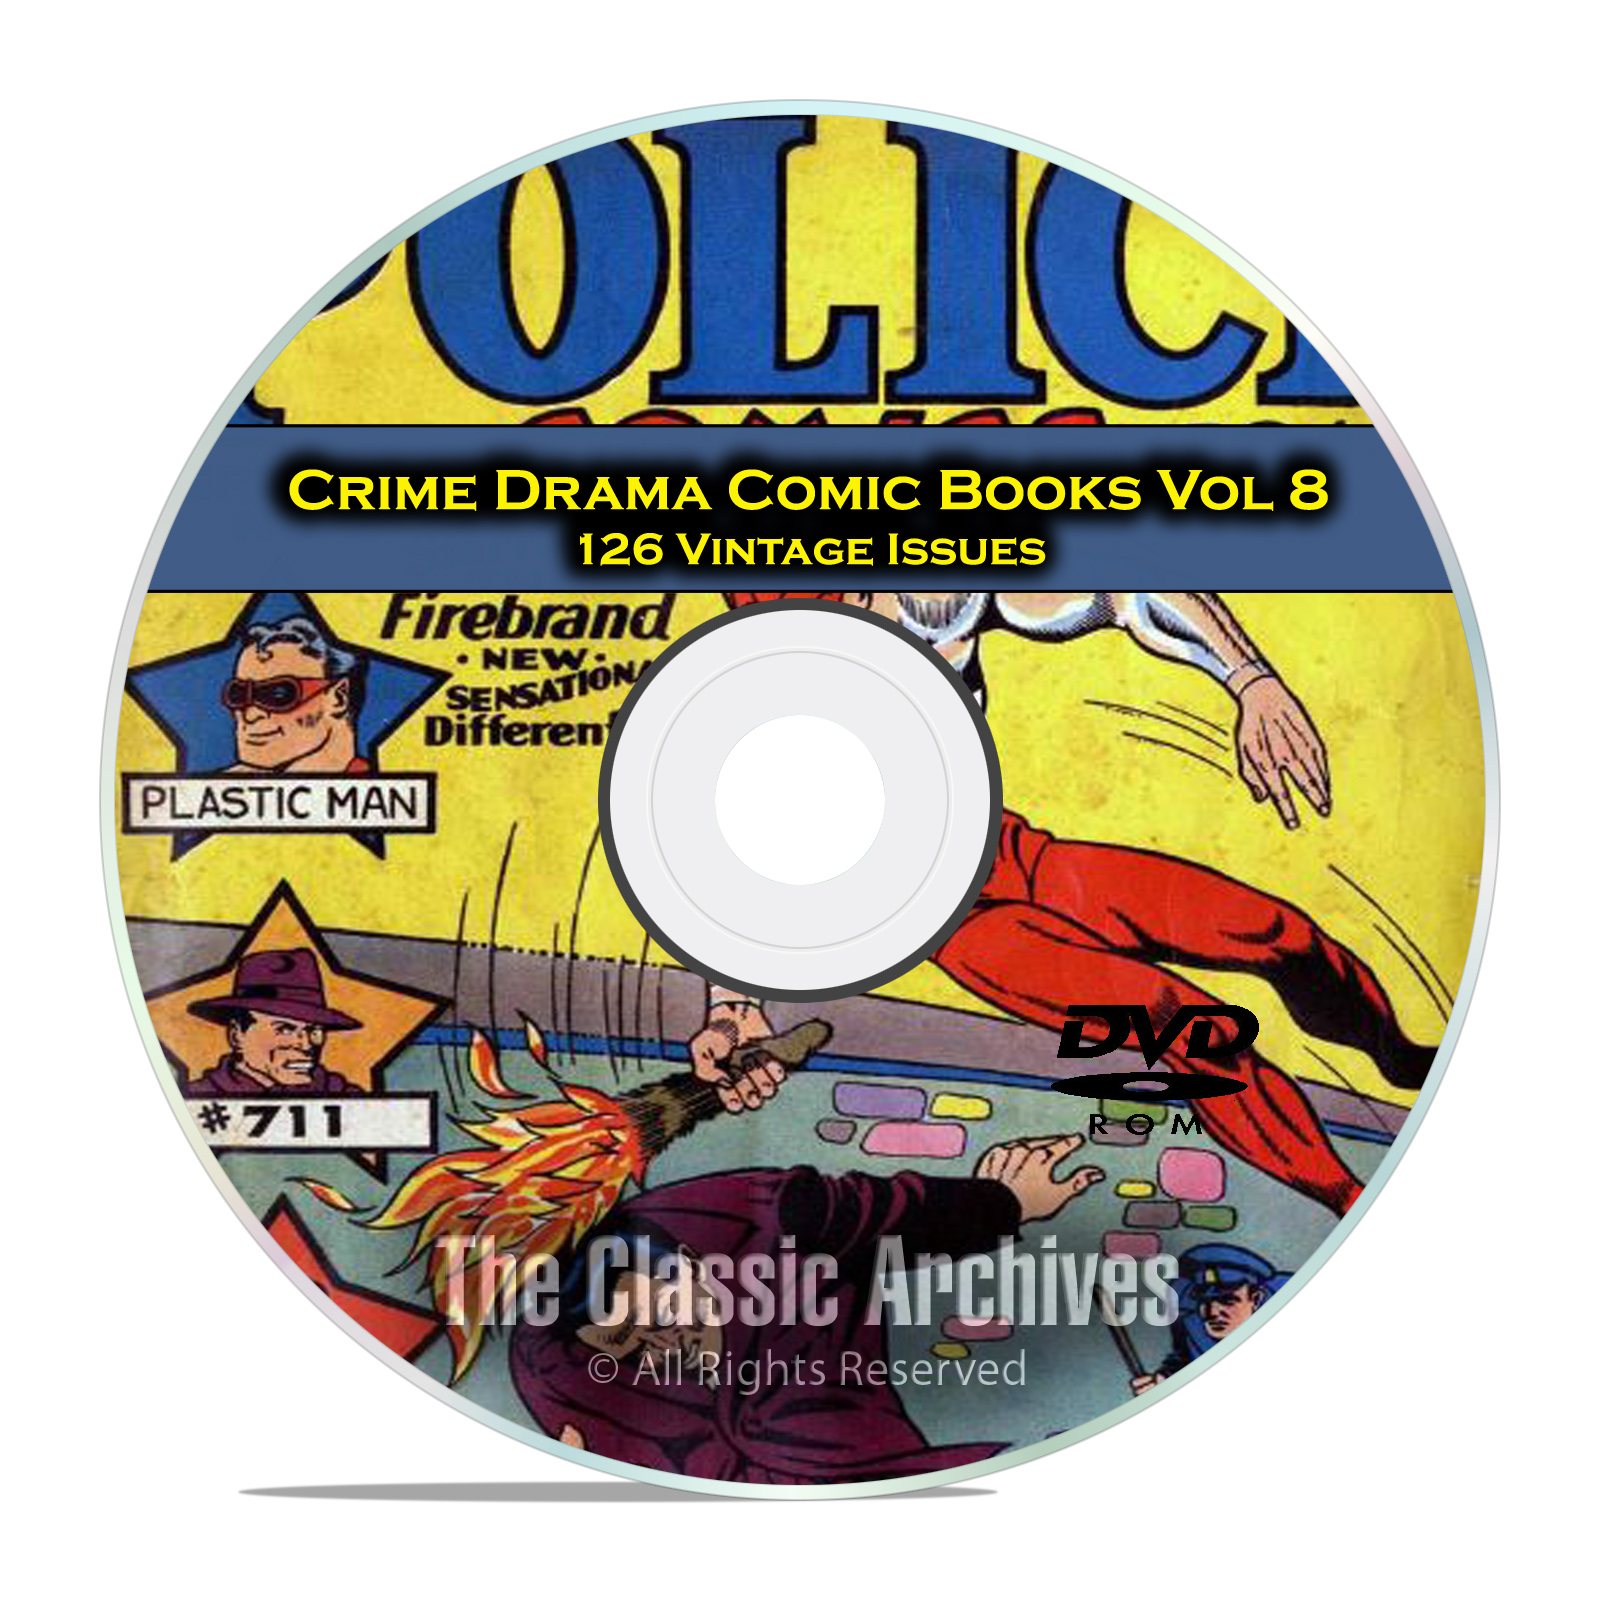 Crime Drama, Suspense, Vol 8, Police Comics 126 Issues Golden Age Comic DVD